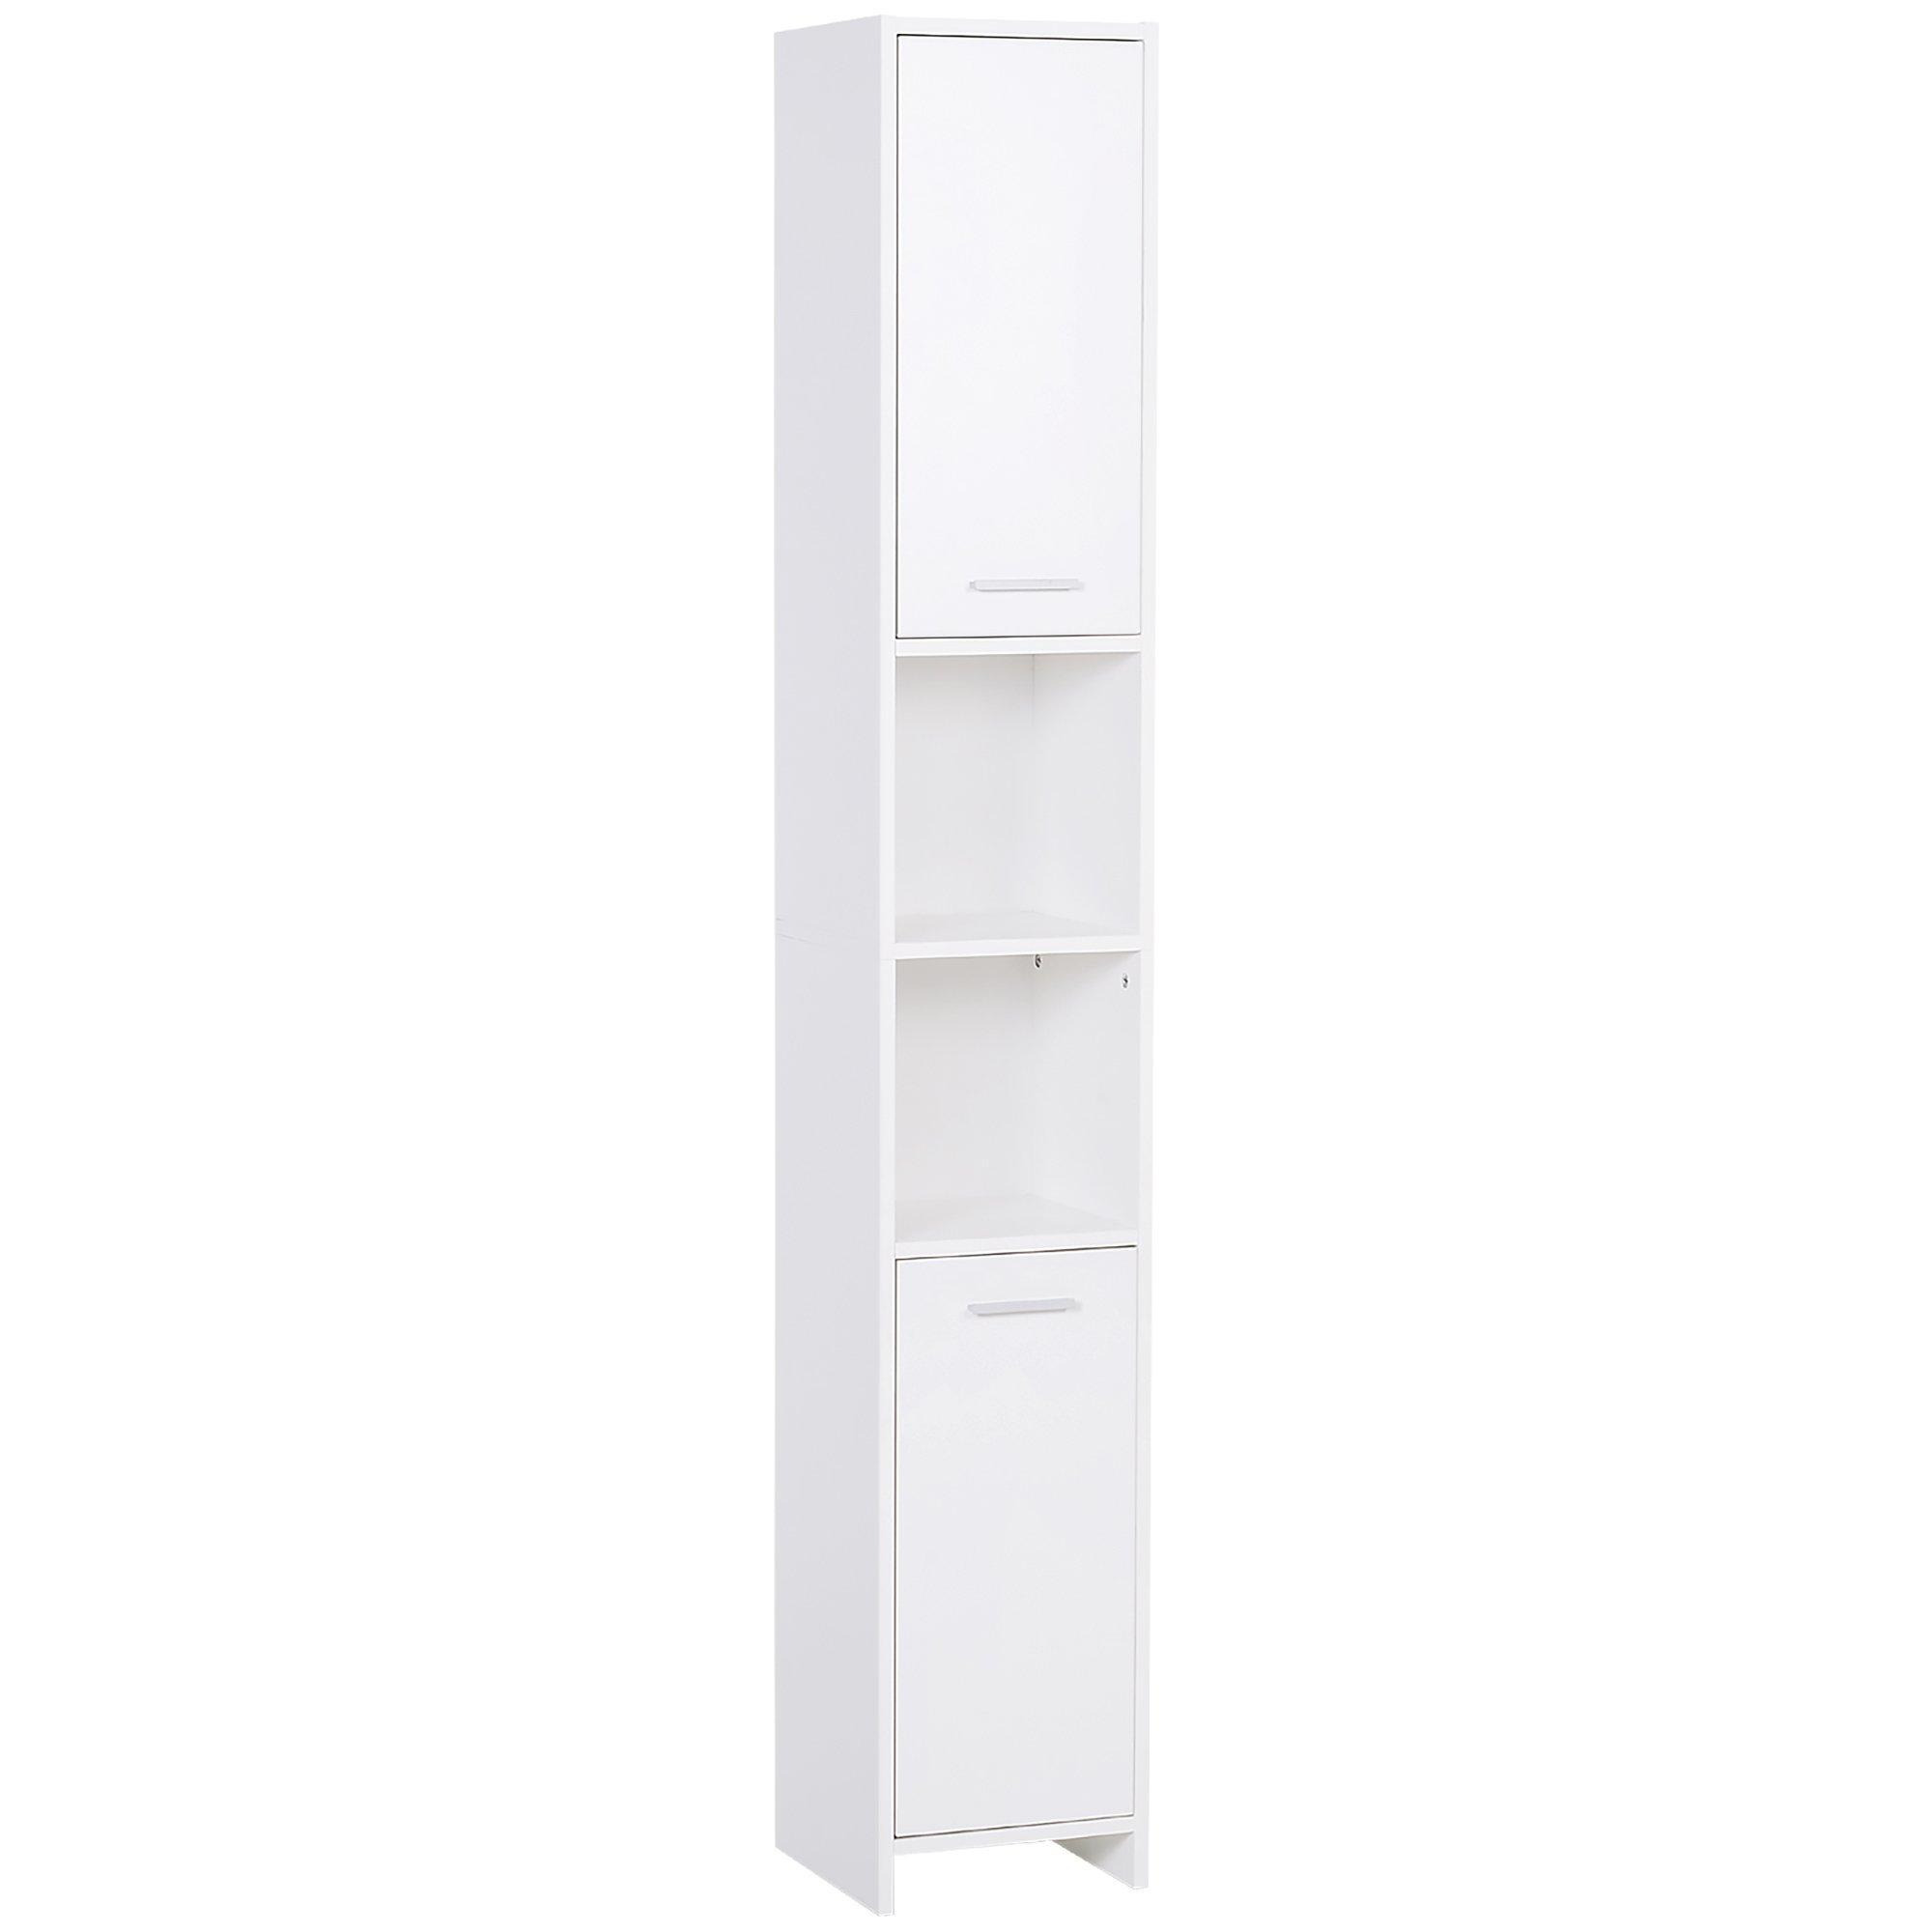 Bathroom Floor Storage Cabinet Slim Tallboy Door Cupboard & Shelves - image 1